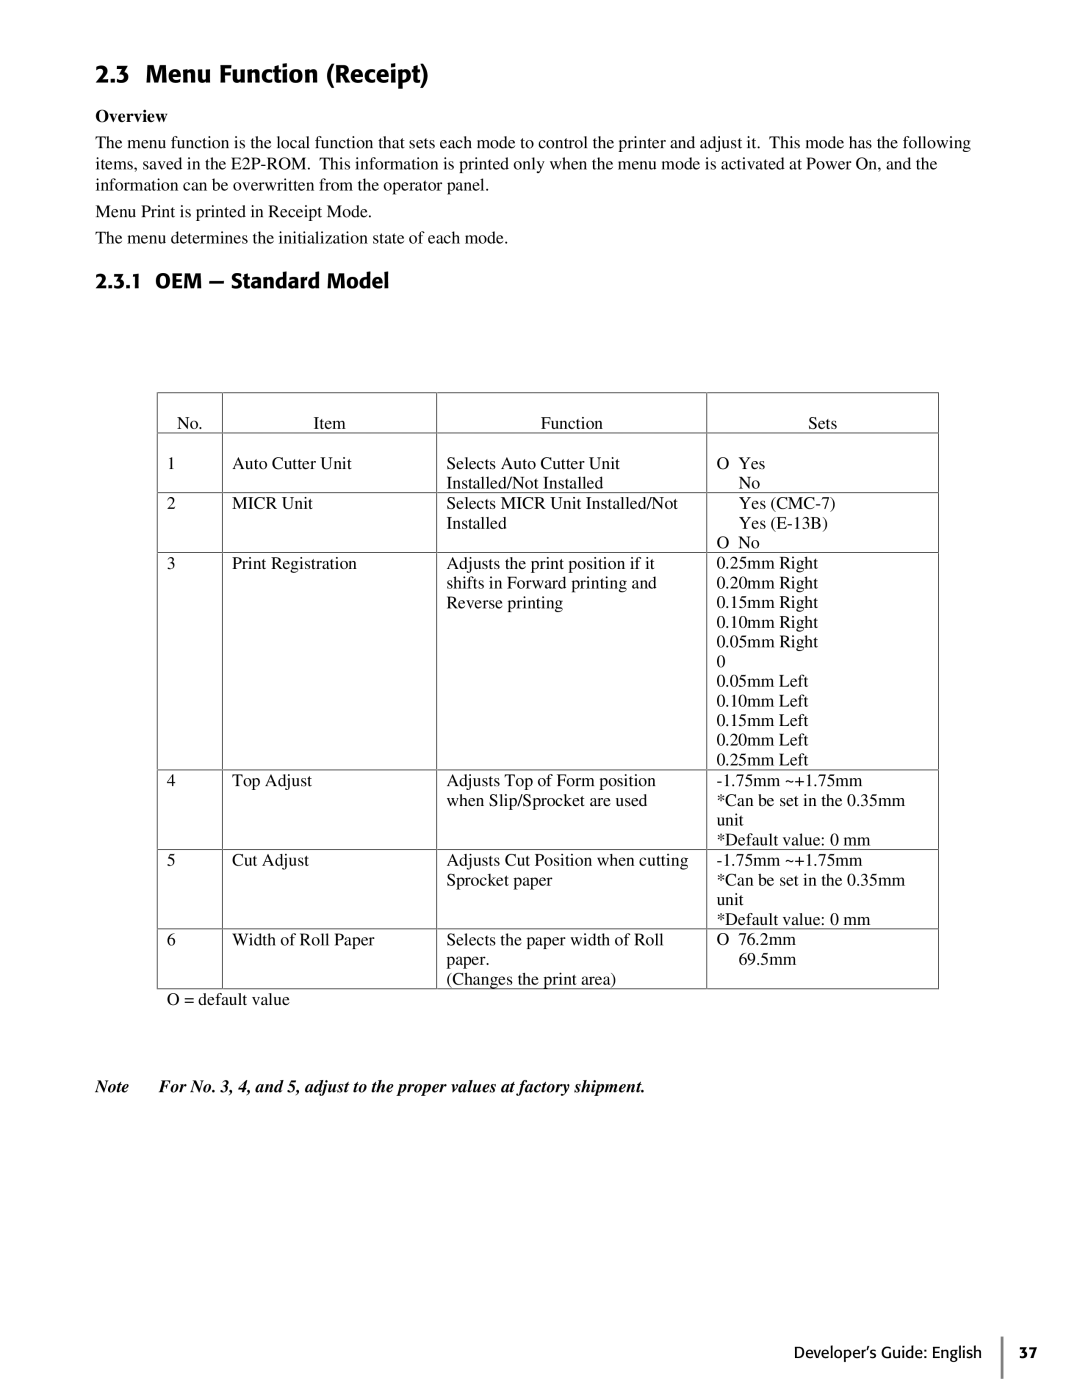 Oki 425D manual Menu Function Receipt, OEM - Standard Model, Overview 